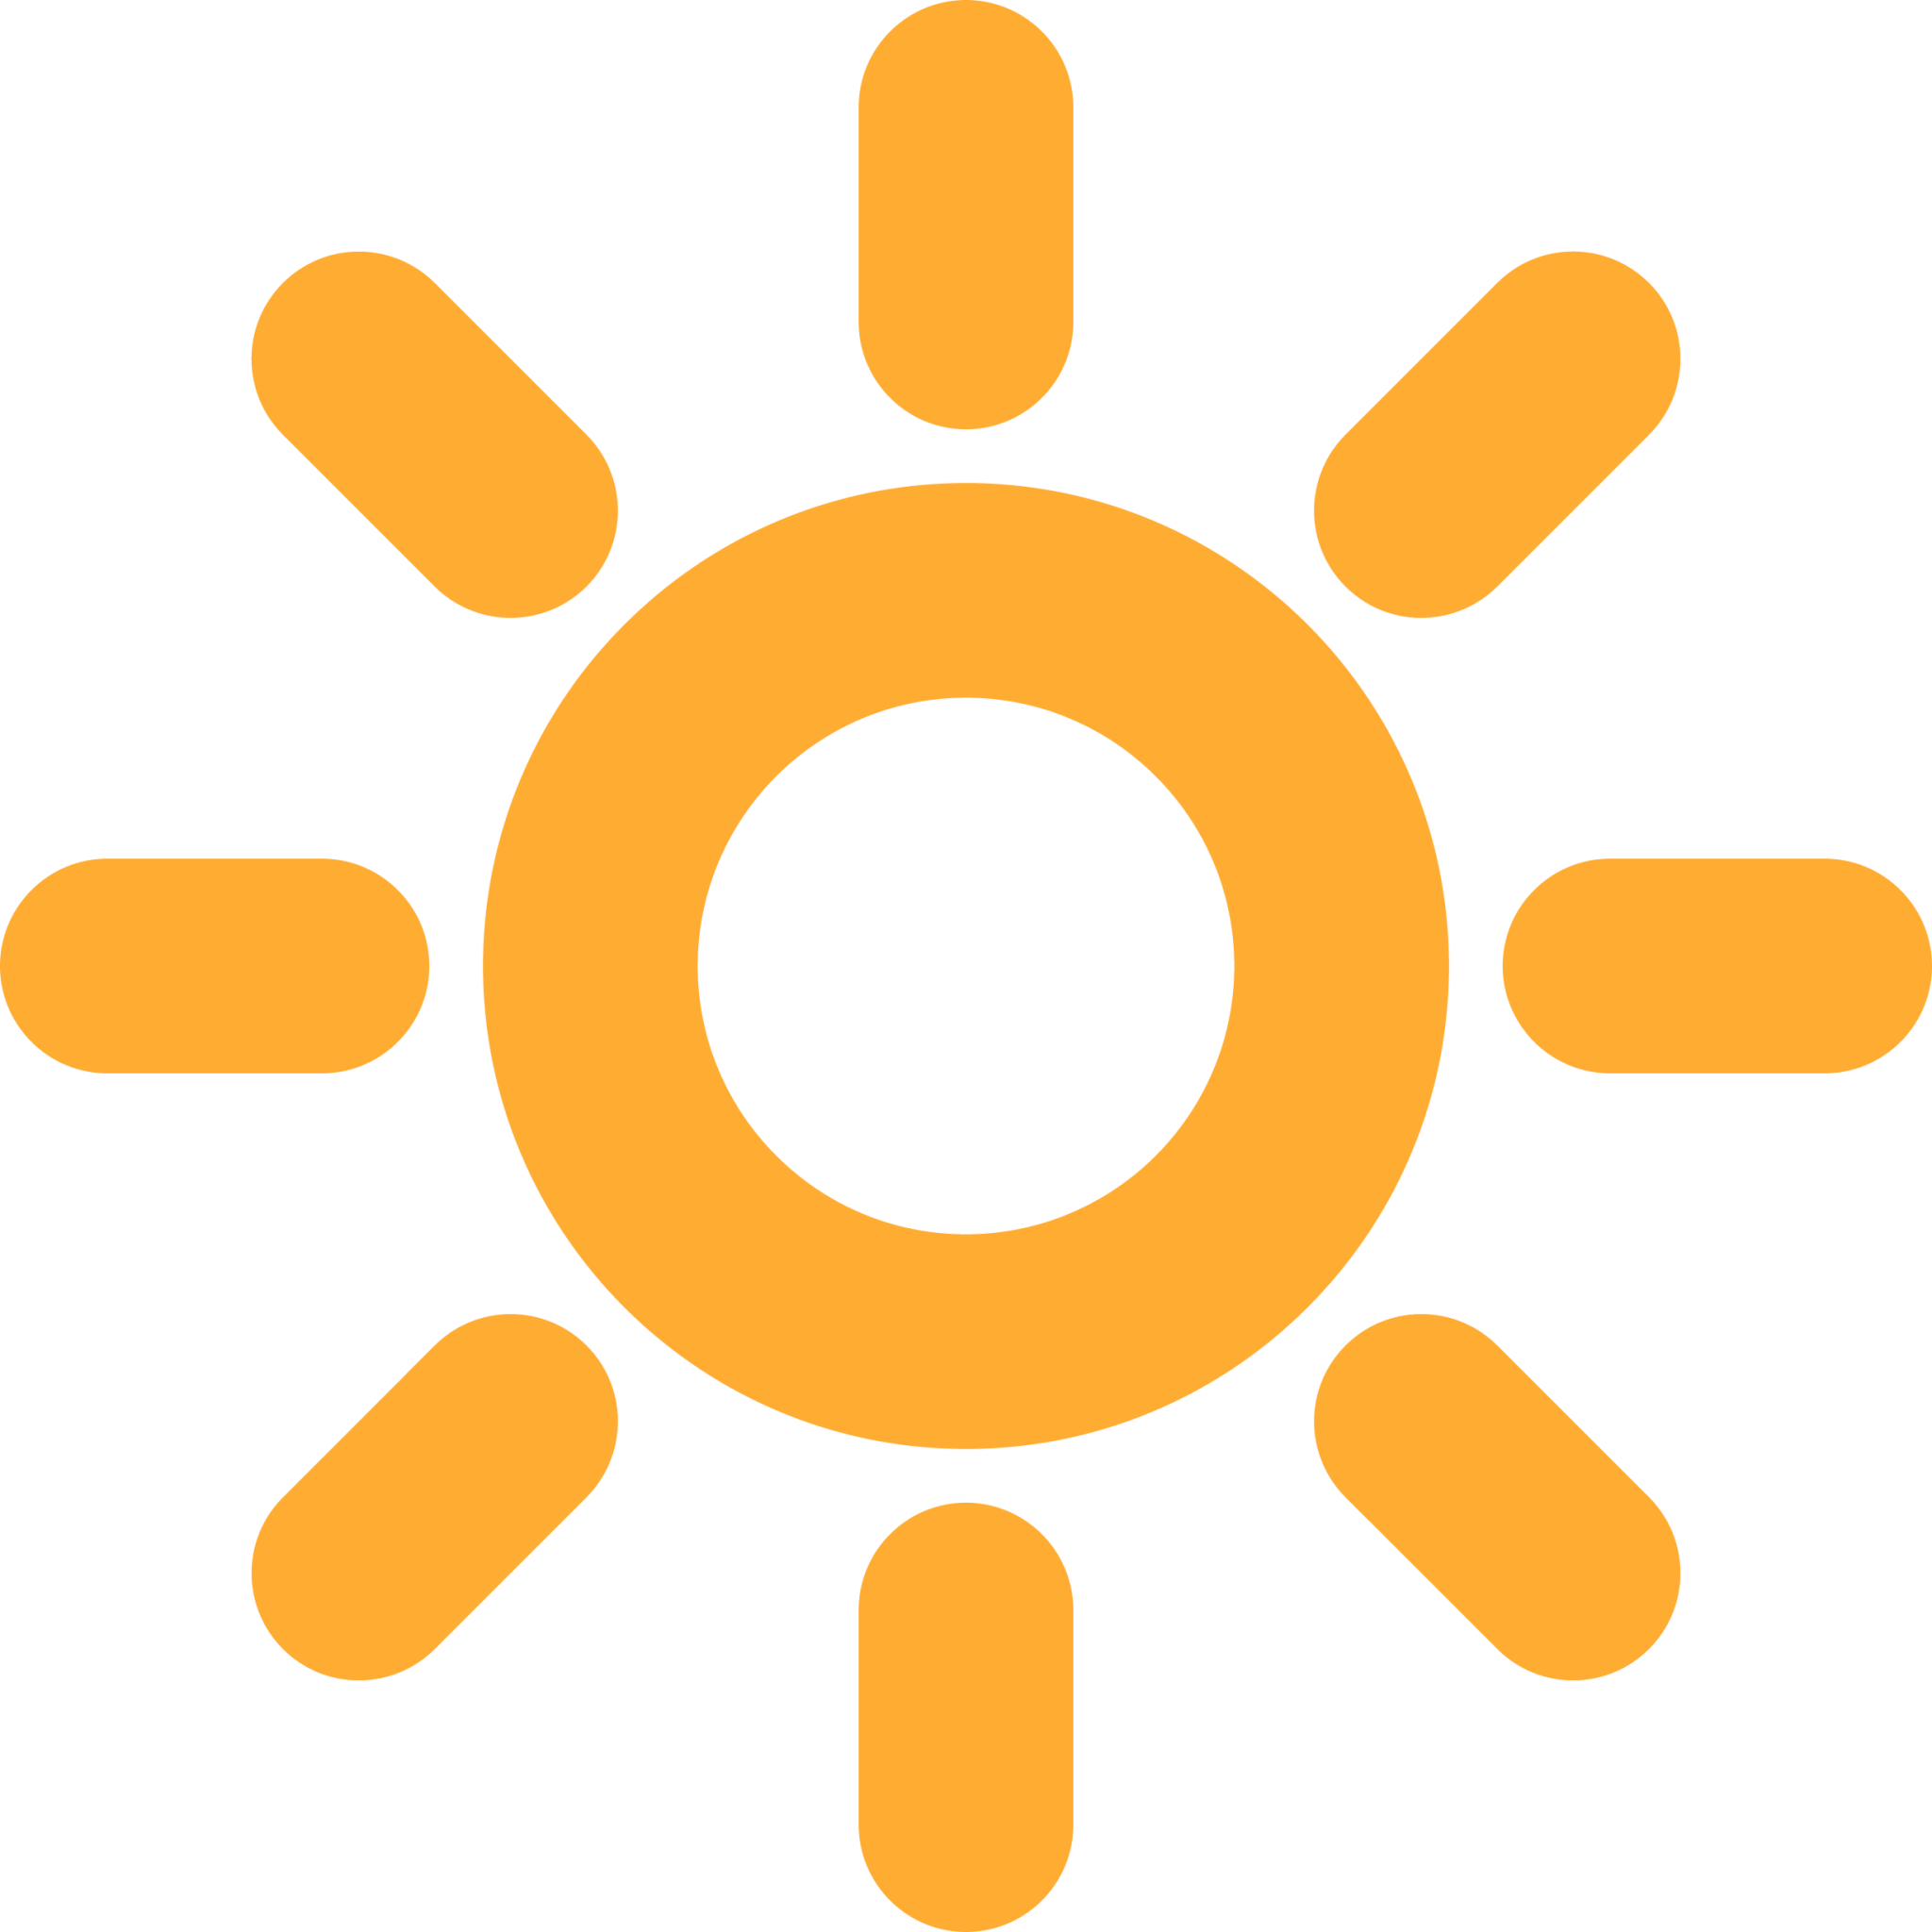 high brightness symbol emoji